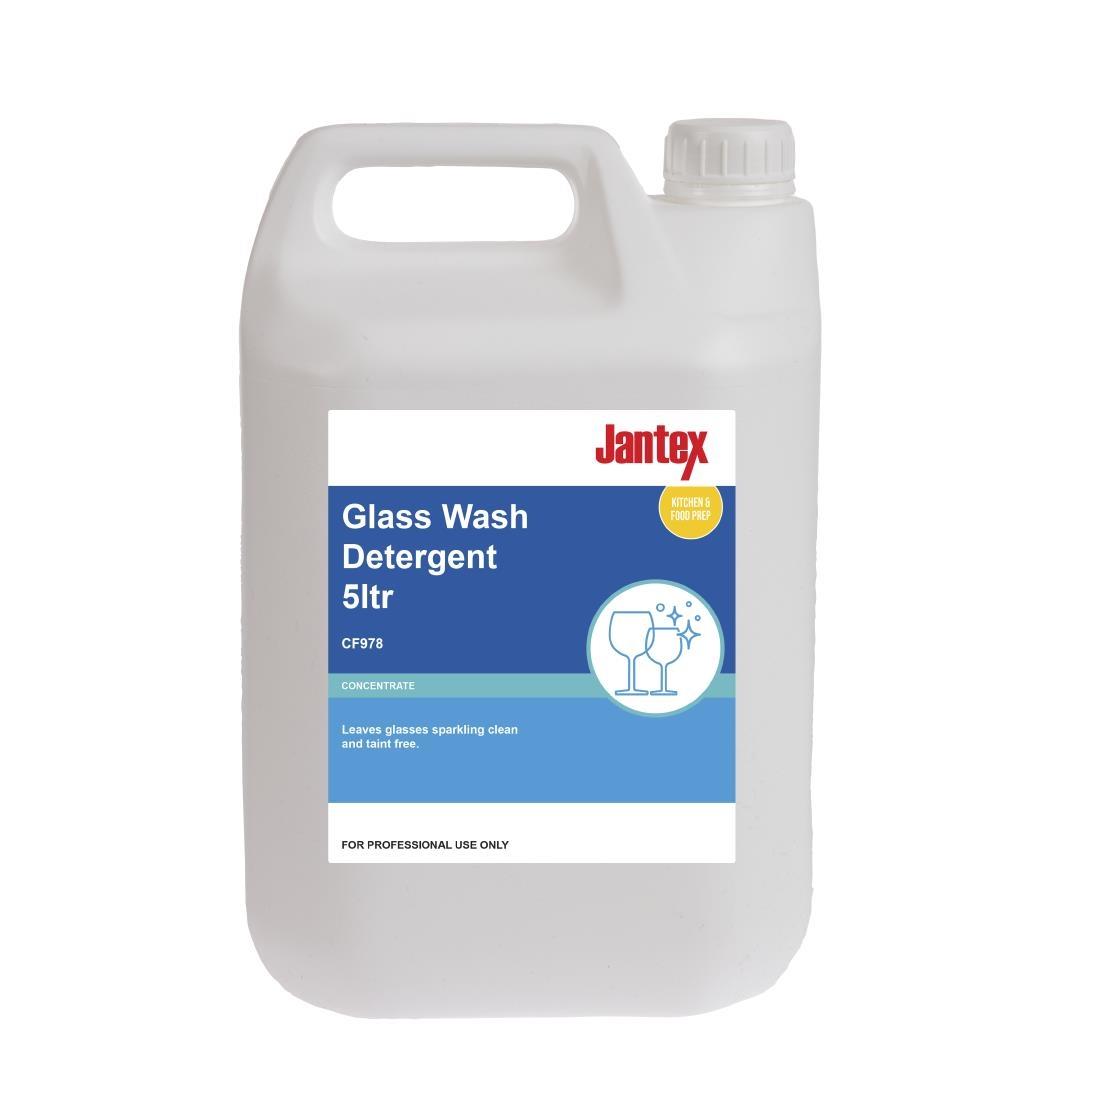 Jantex Glasswasher Detergent Concentrate 5Ltr - CF978  - 1